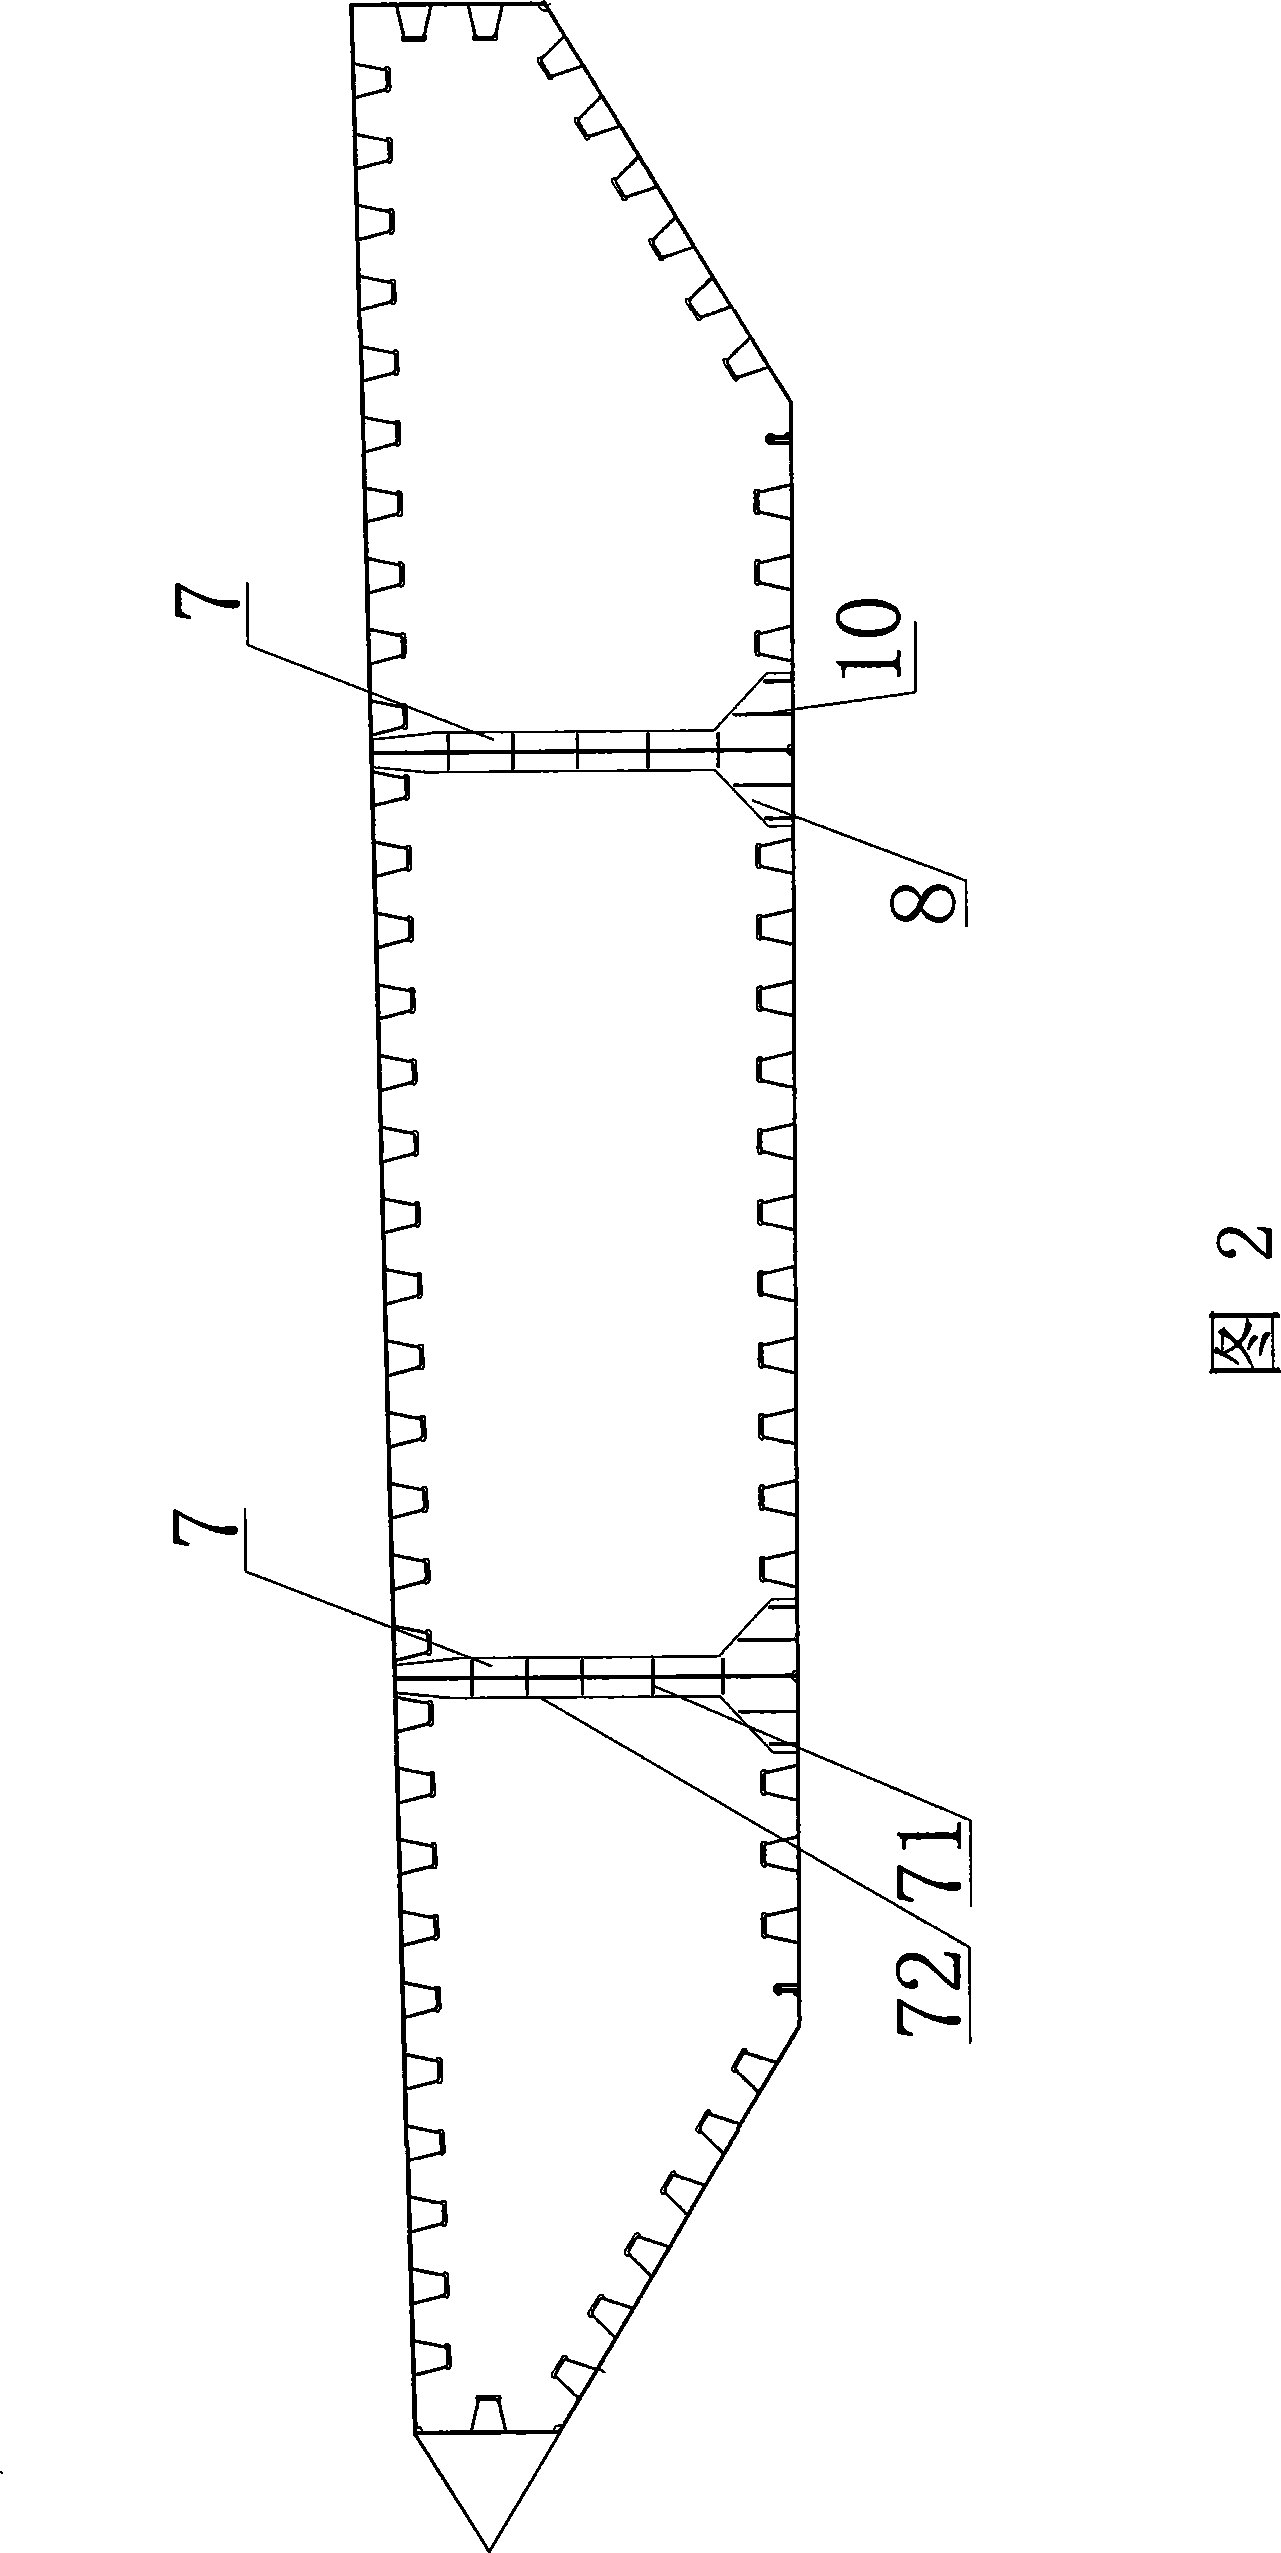 Steel box beam erection method for self-anchored suspension bridge